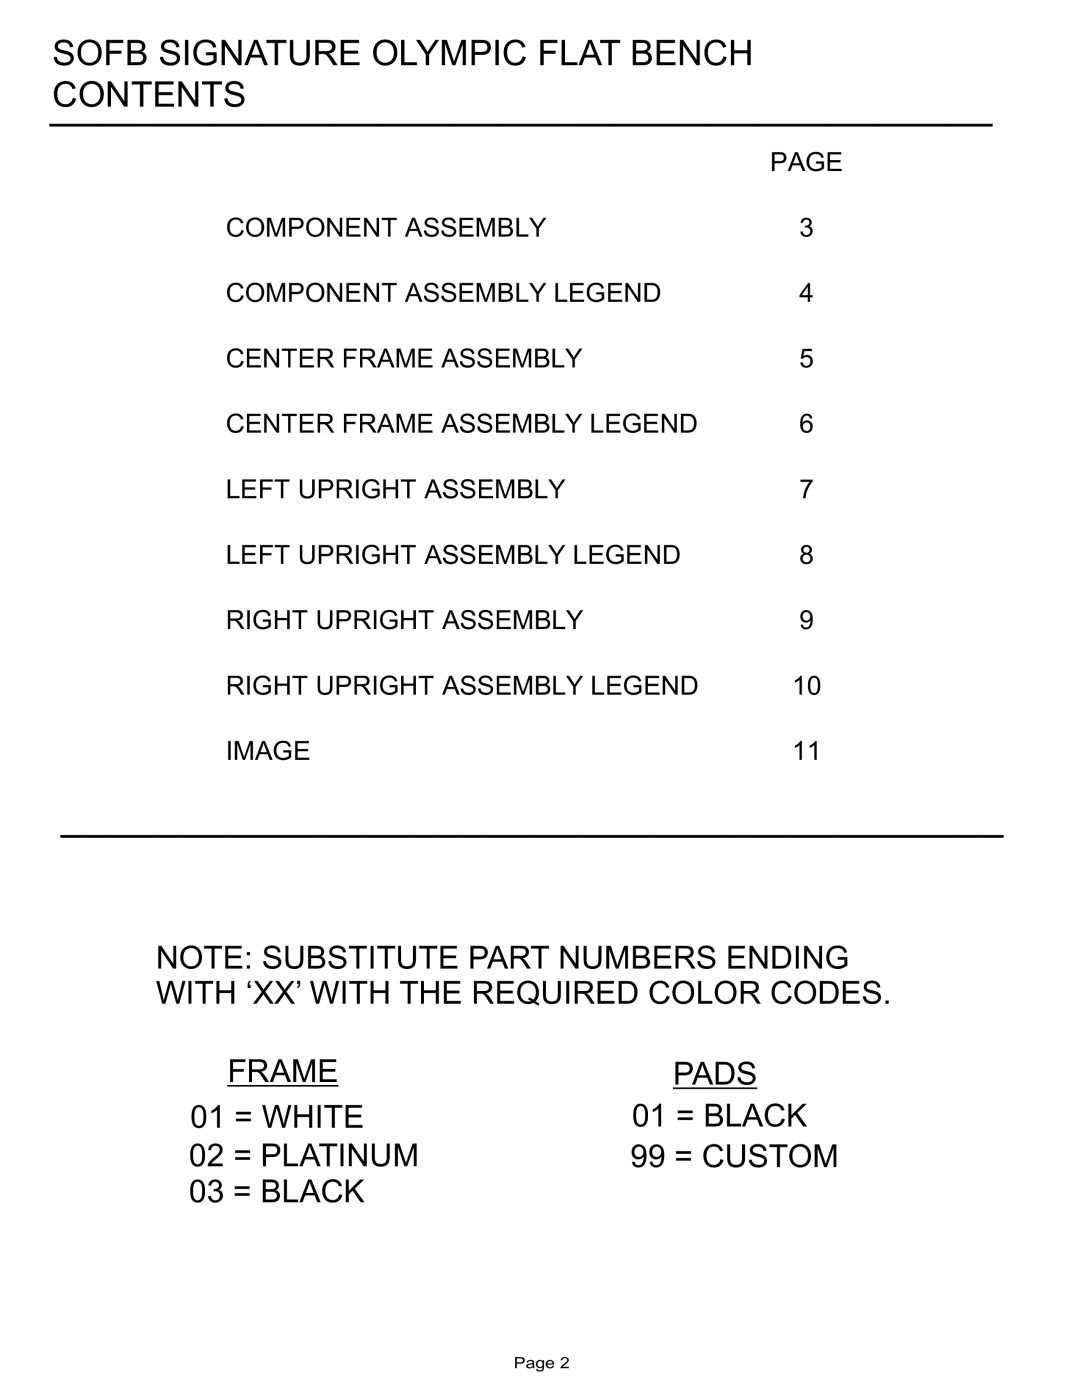 Life Fitness SOFB Sofb Signature Olympic Flat Bench Contents, Frame, Pads, 01 = WHITE, 01 = BLACK, = Platinum, 99 = CUSTOM 